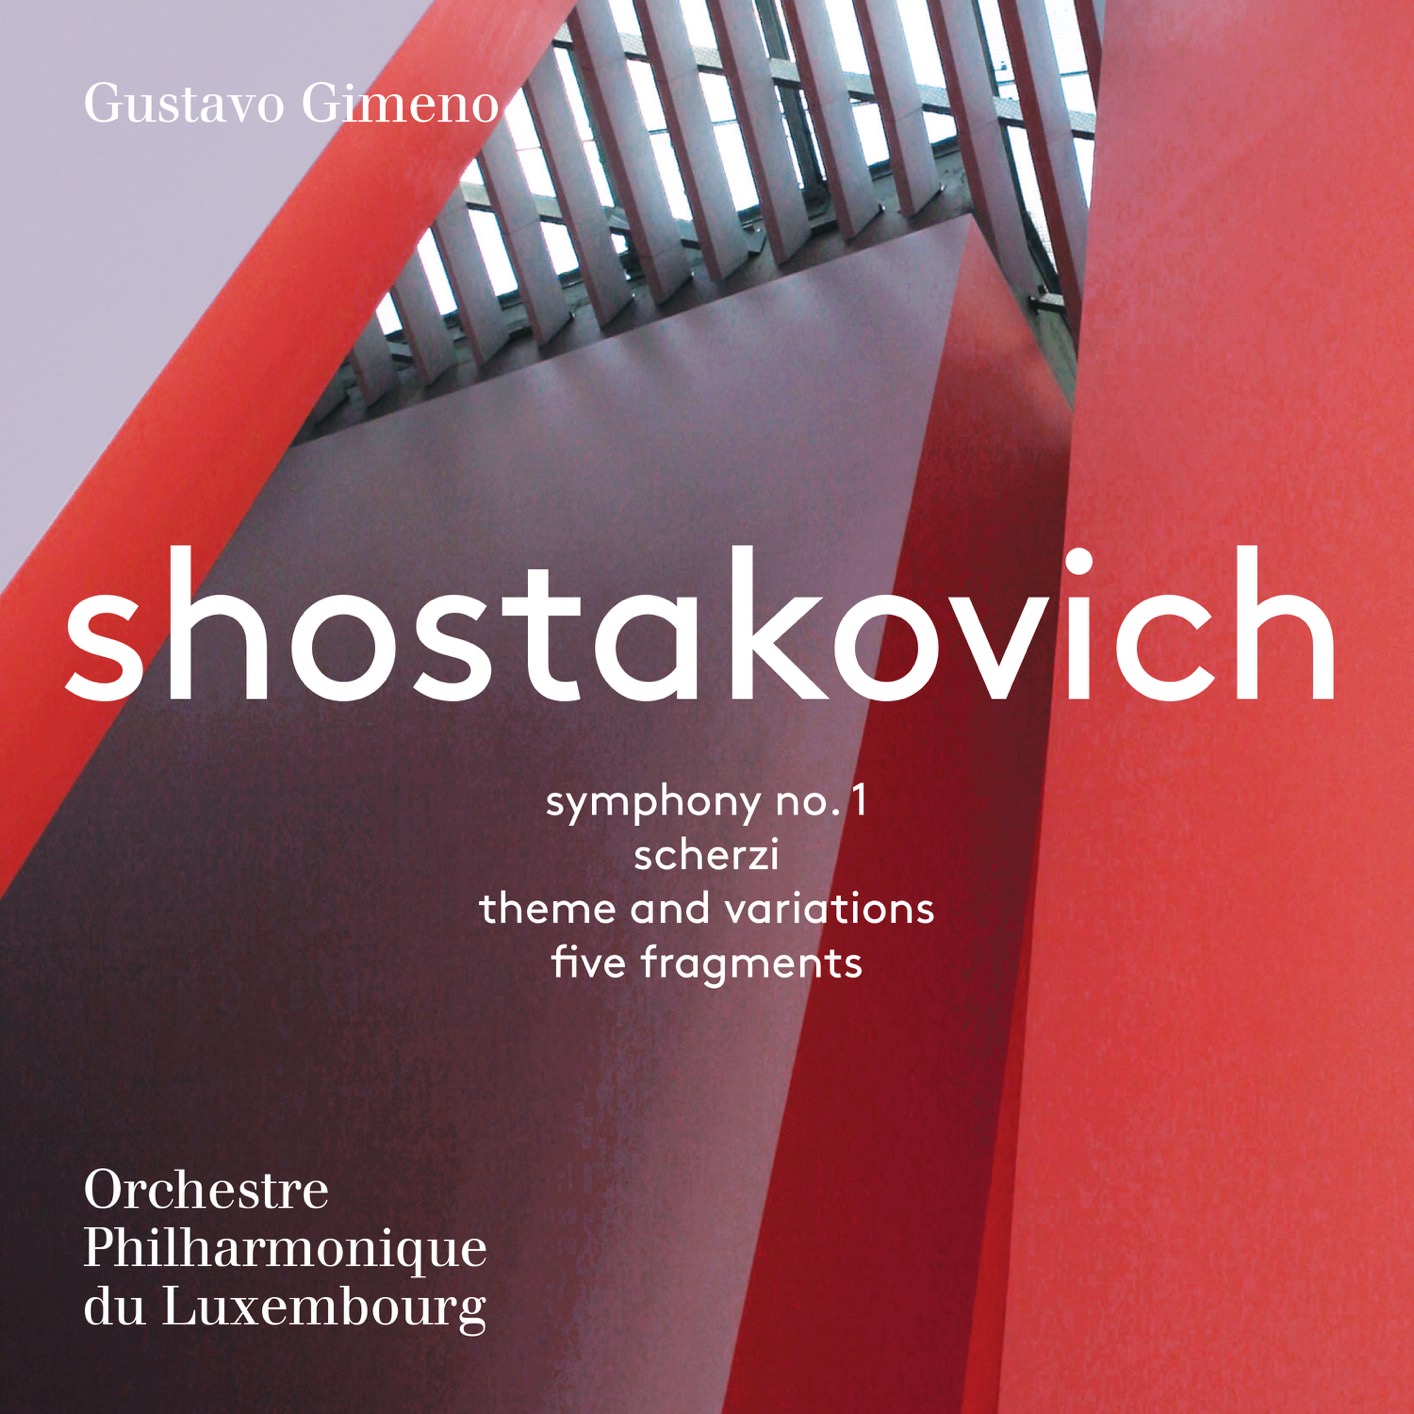 Orchestre Philharmonique du Luxembourg, Gustavo Gimeno - Shostakovich: Symphony No. 1, Scherzi, Theme and Variations & 5 Fragments (2012) [HighResAudio DSF DSD64/2.82MHz]